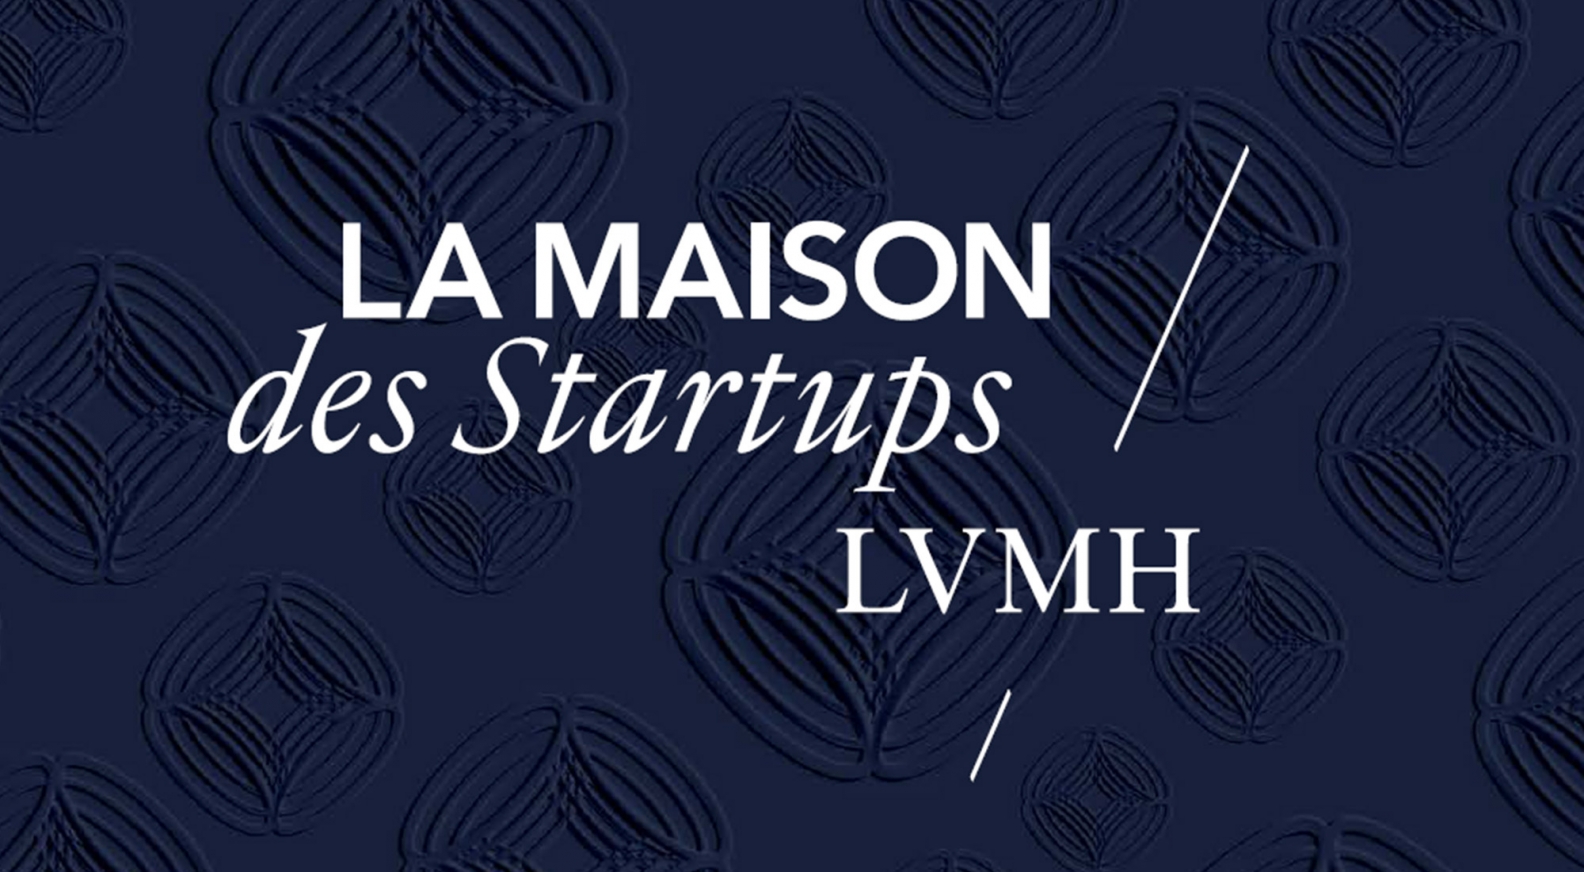 Open Innovation : LVMH soutient les start-up